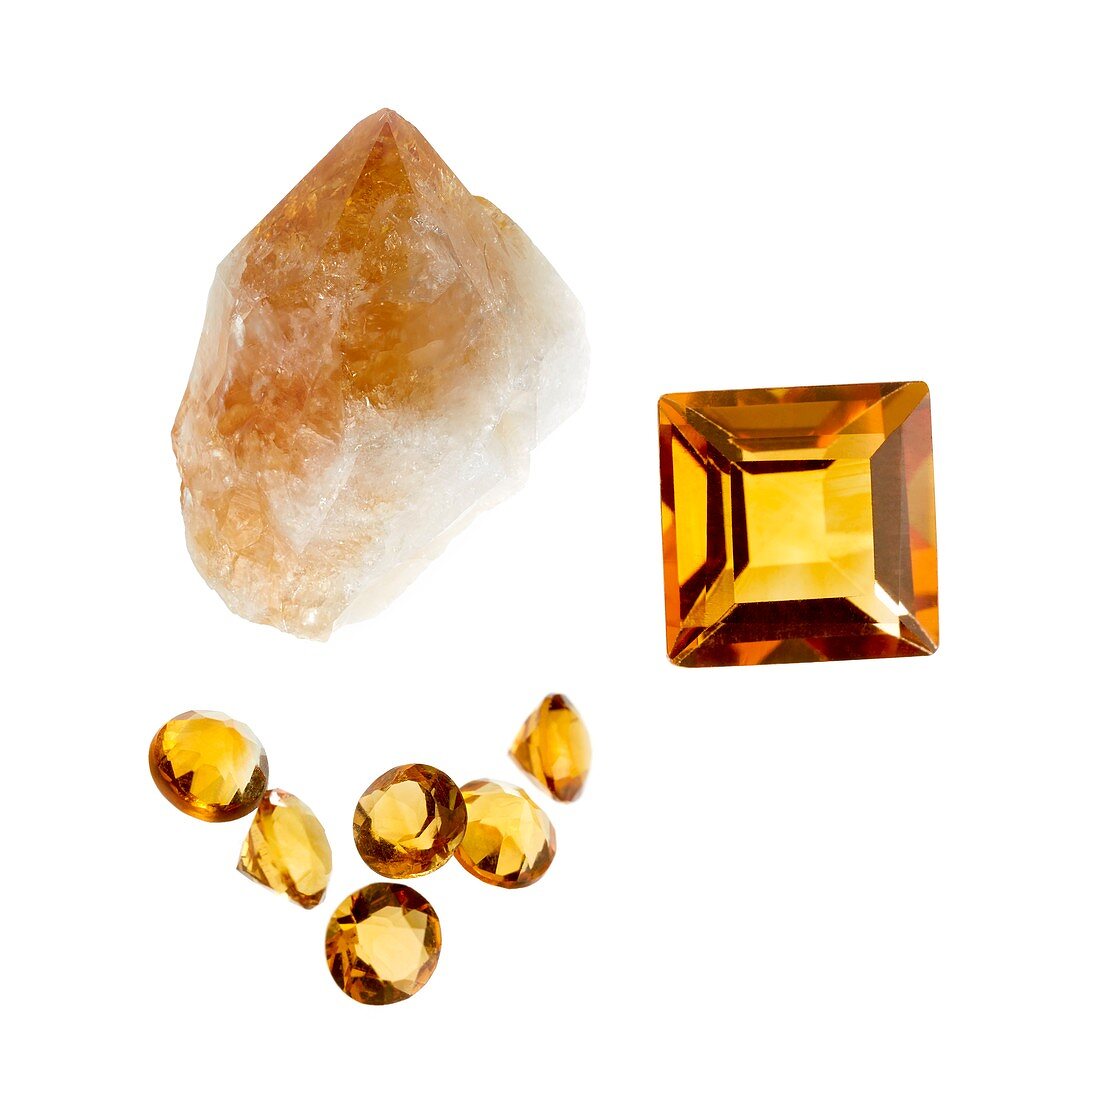 Citrine gemstones and crystal